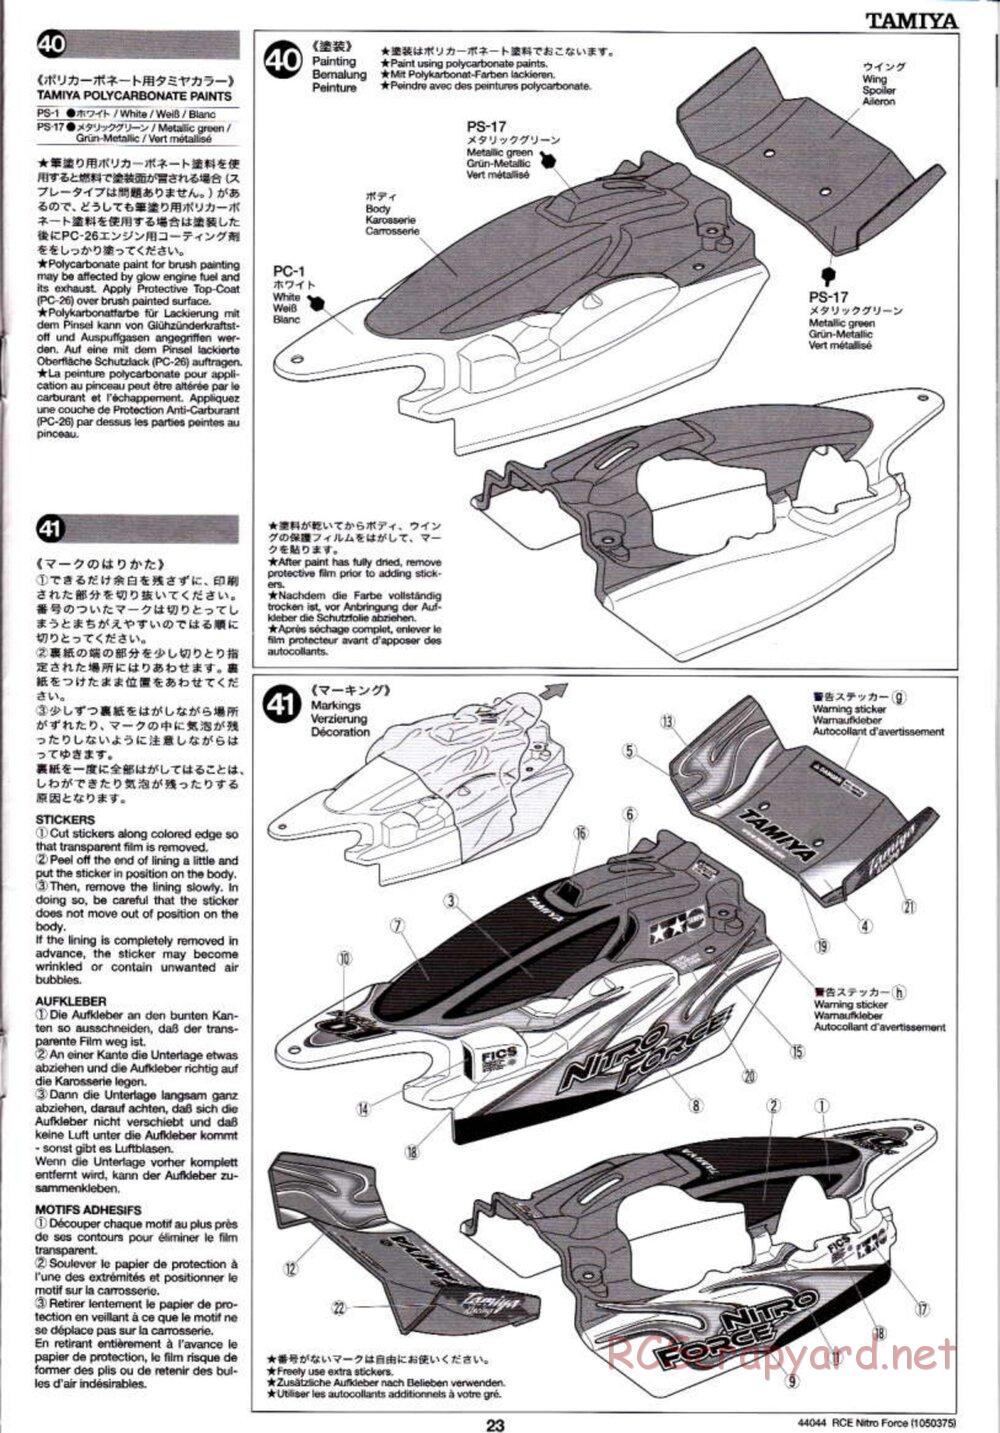 Tamiya - Nitro Force - NDF-01 Chassis - Manual - Page 23